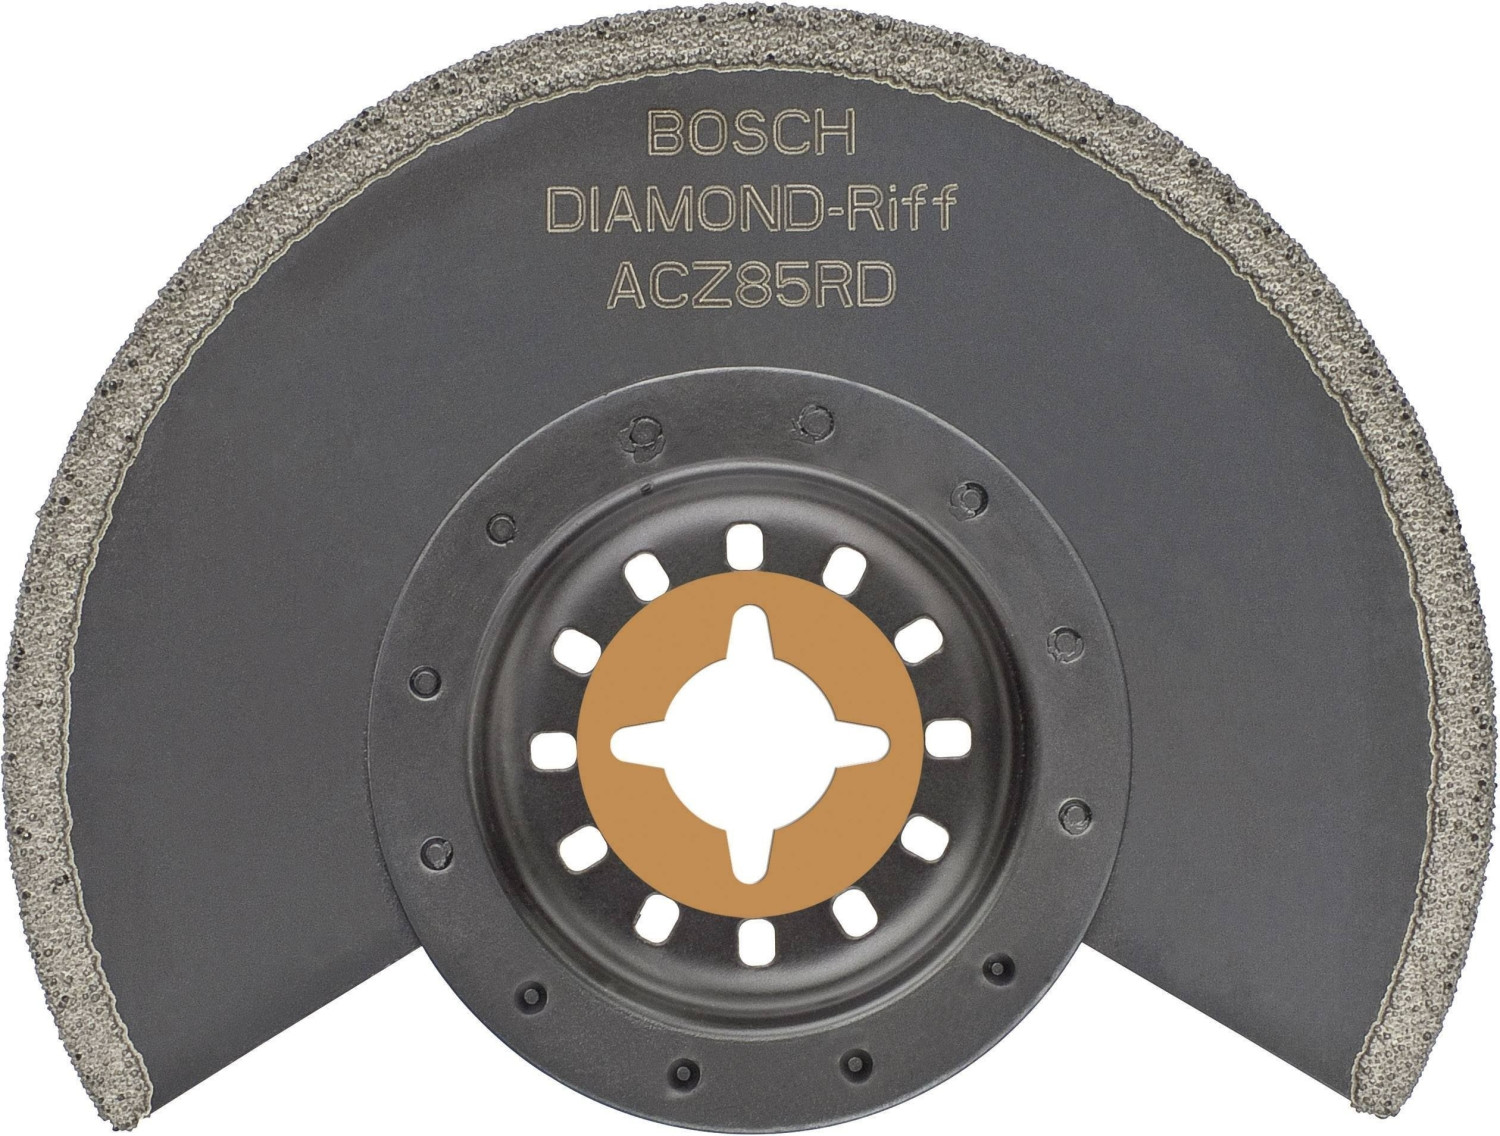 Bosch Diamant-Riff Segmentsägeblatt 85 mm ACZ 85 RD (2608661689) ab 31,90 €  | Preisvergleich bei